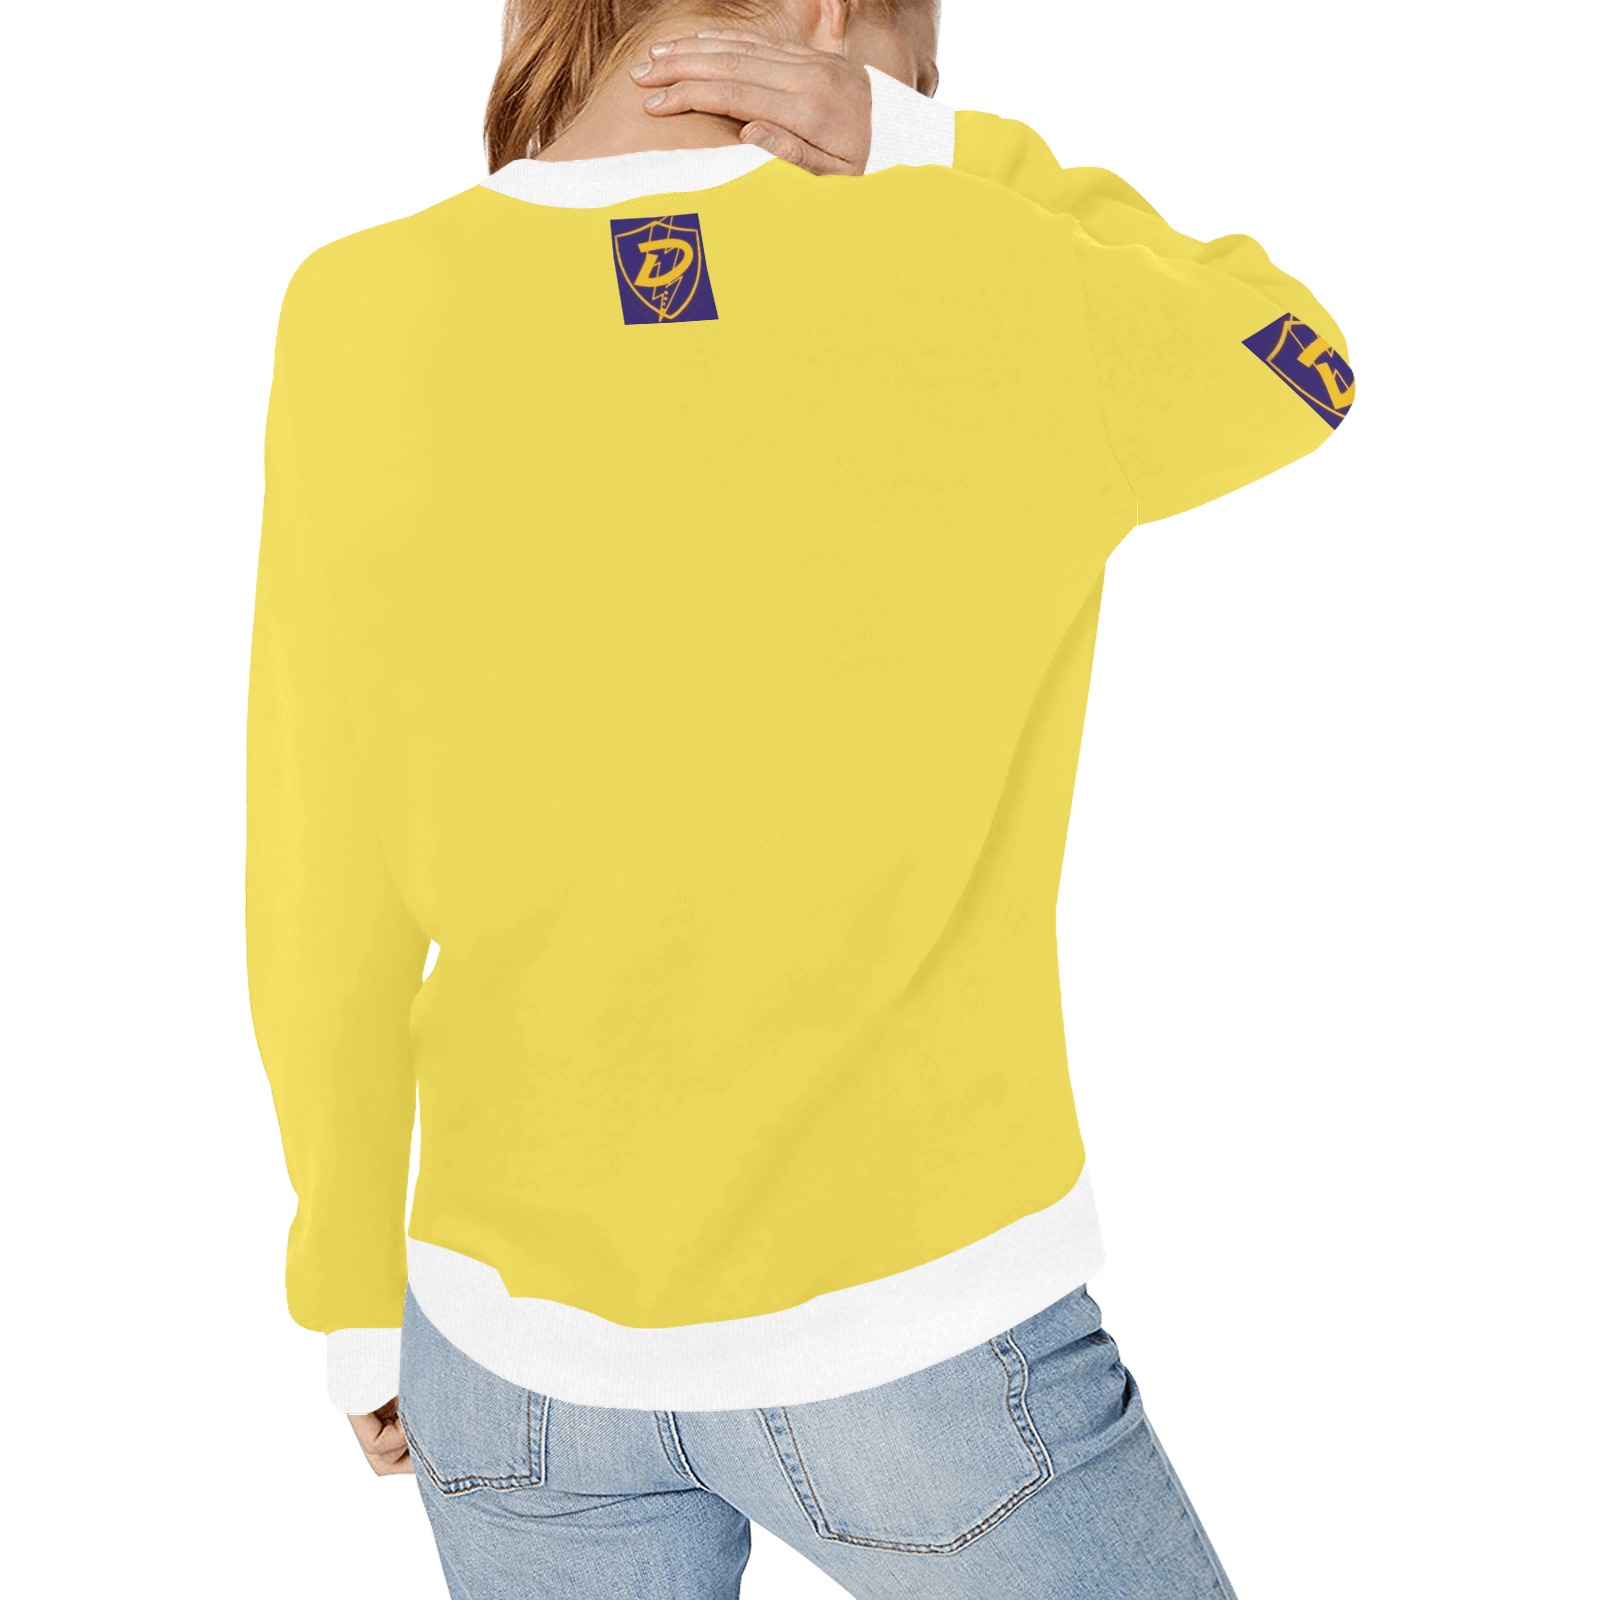 Dionio Clothing - Women's Crew Neck Sweatshirt (Yellow & Purple W/Big Logo & Name) Women's Rib Cuff Crew Neck Sweatshirt (Model H34)